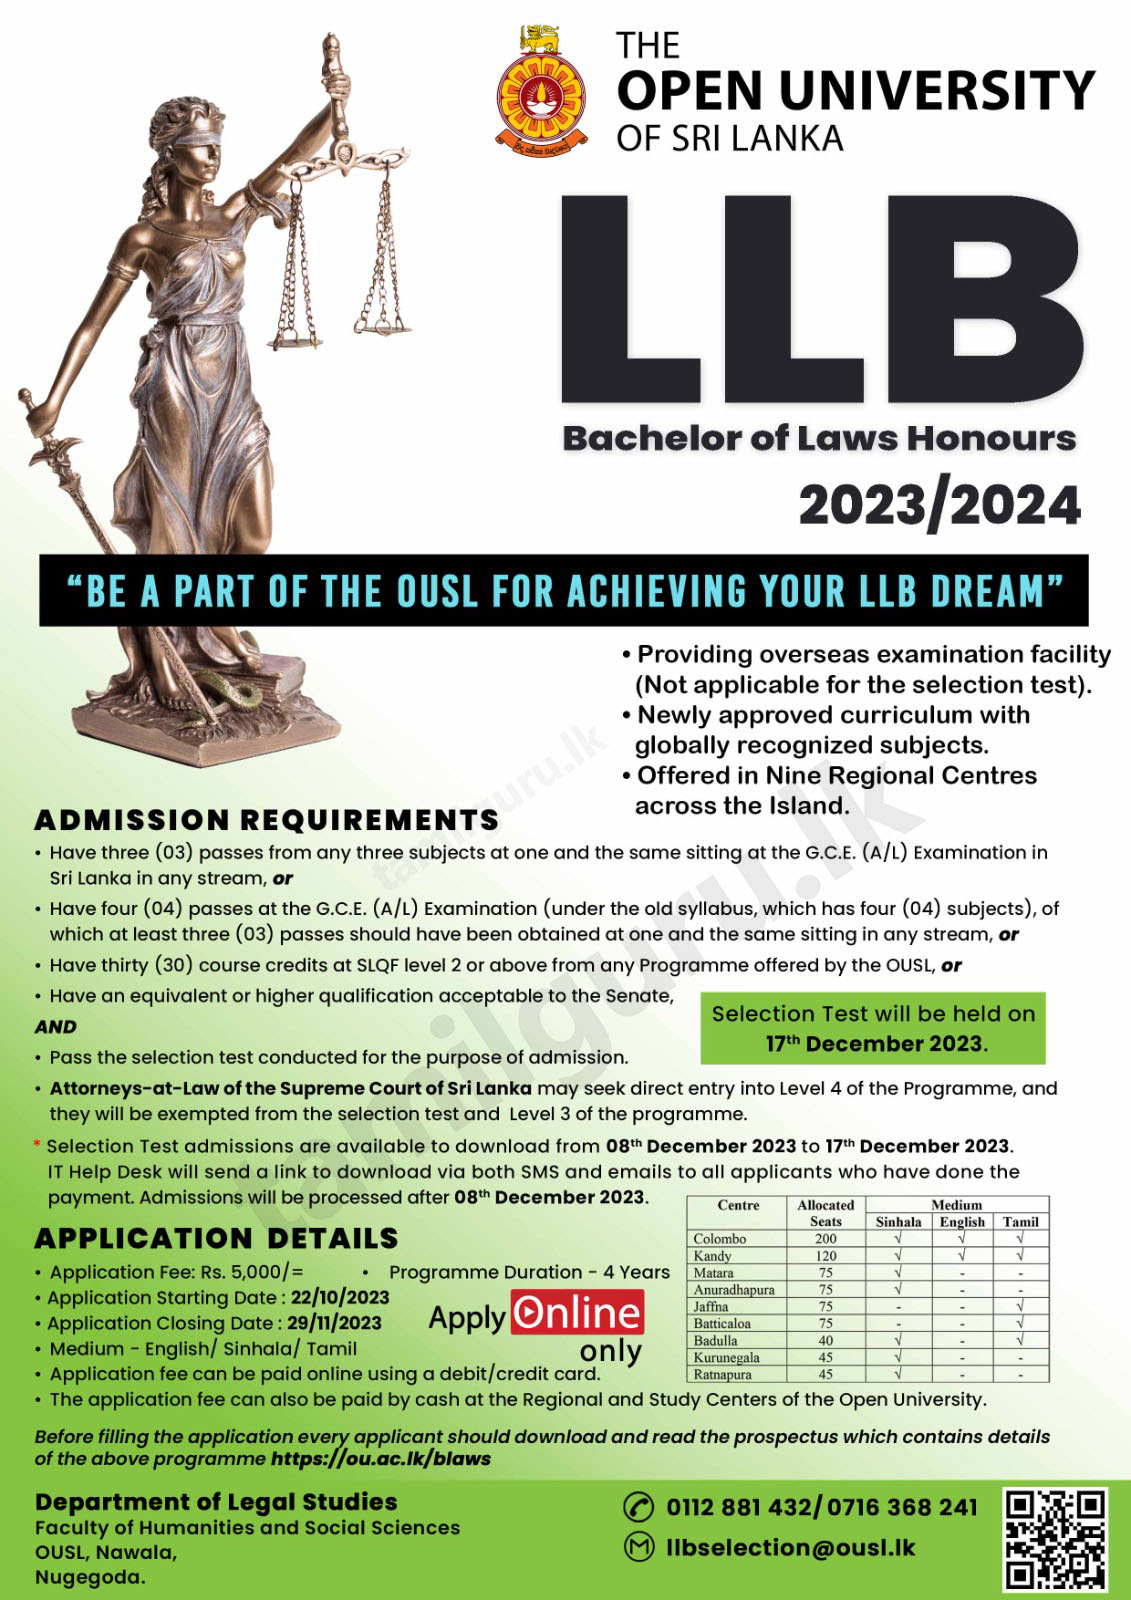 Bachelor of Laws (LLB) Degree Programme (Entrance Exam) 2023/24 - The Open University of Sri Lanka (OUSL)